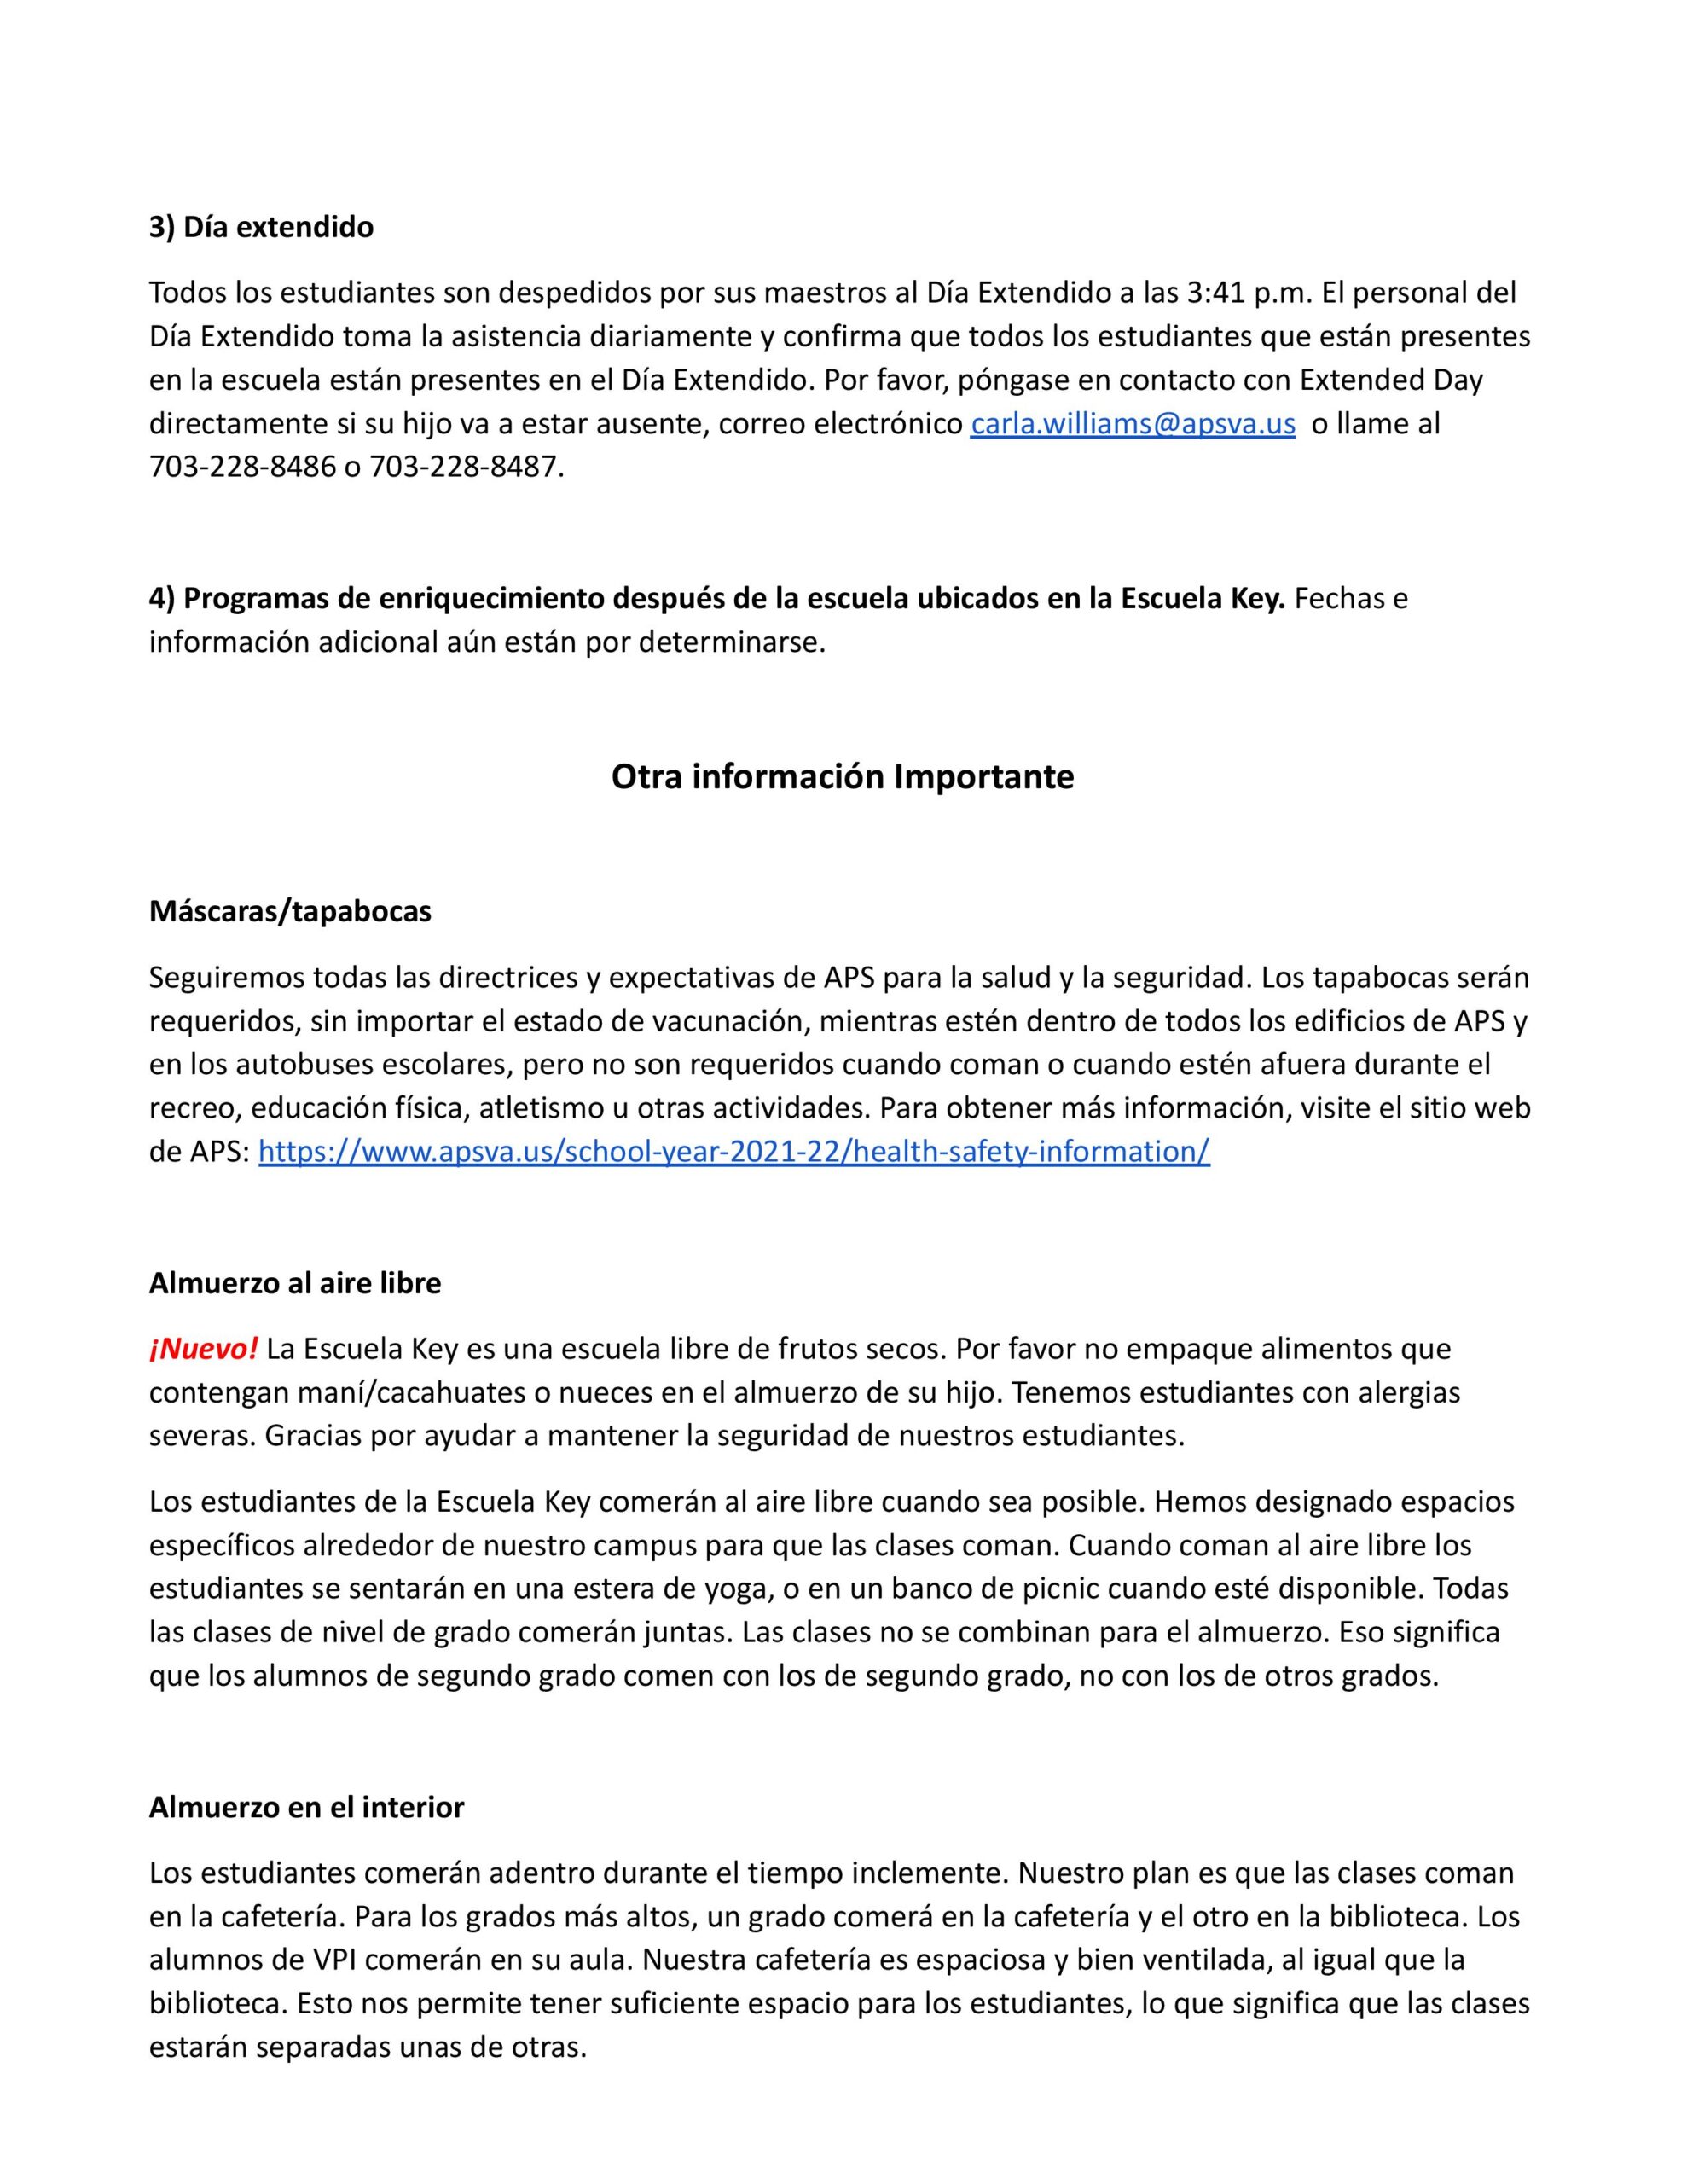 Escuela কী খোলার আগমন এবং বরখাস্ত তথ্য 2021-22SY-পৃষ্ঠা-006